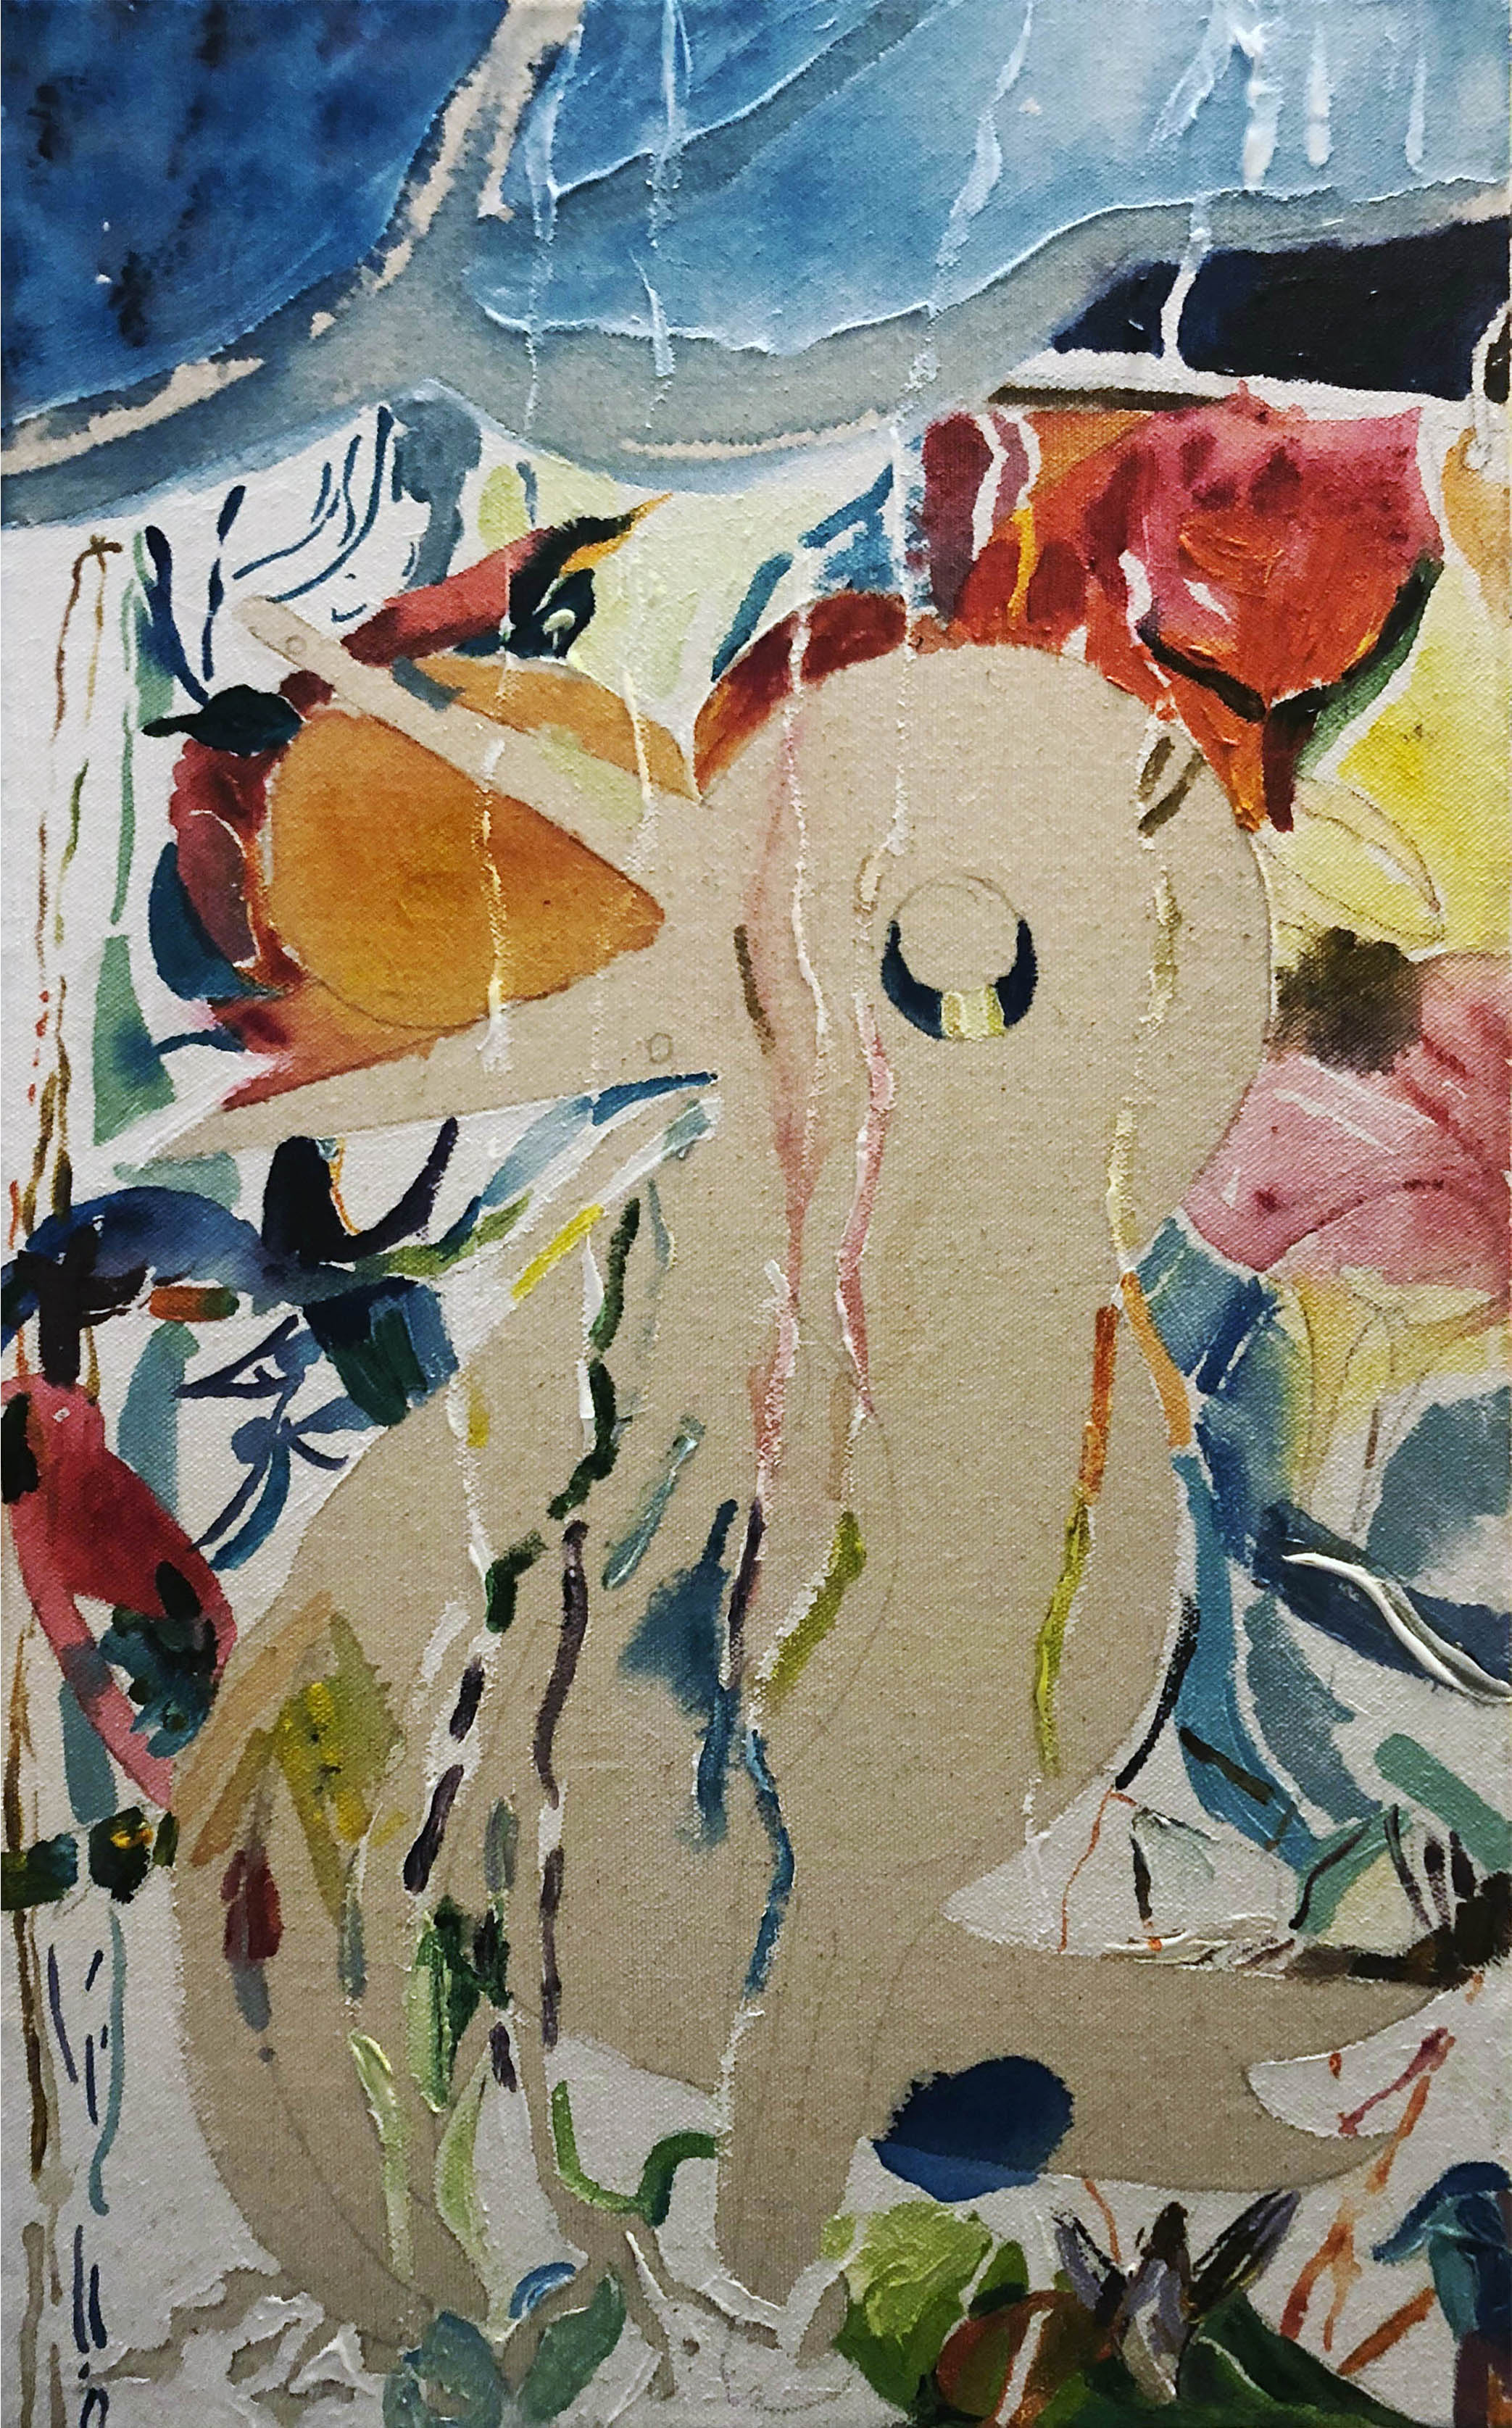 2.Bird Bunny at Home, Spring 2020, 31 x 50cm, Acrylic on canvas copy